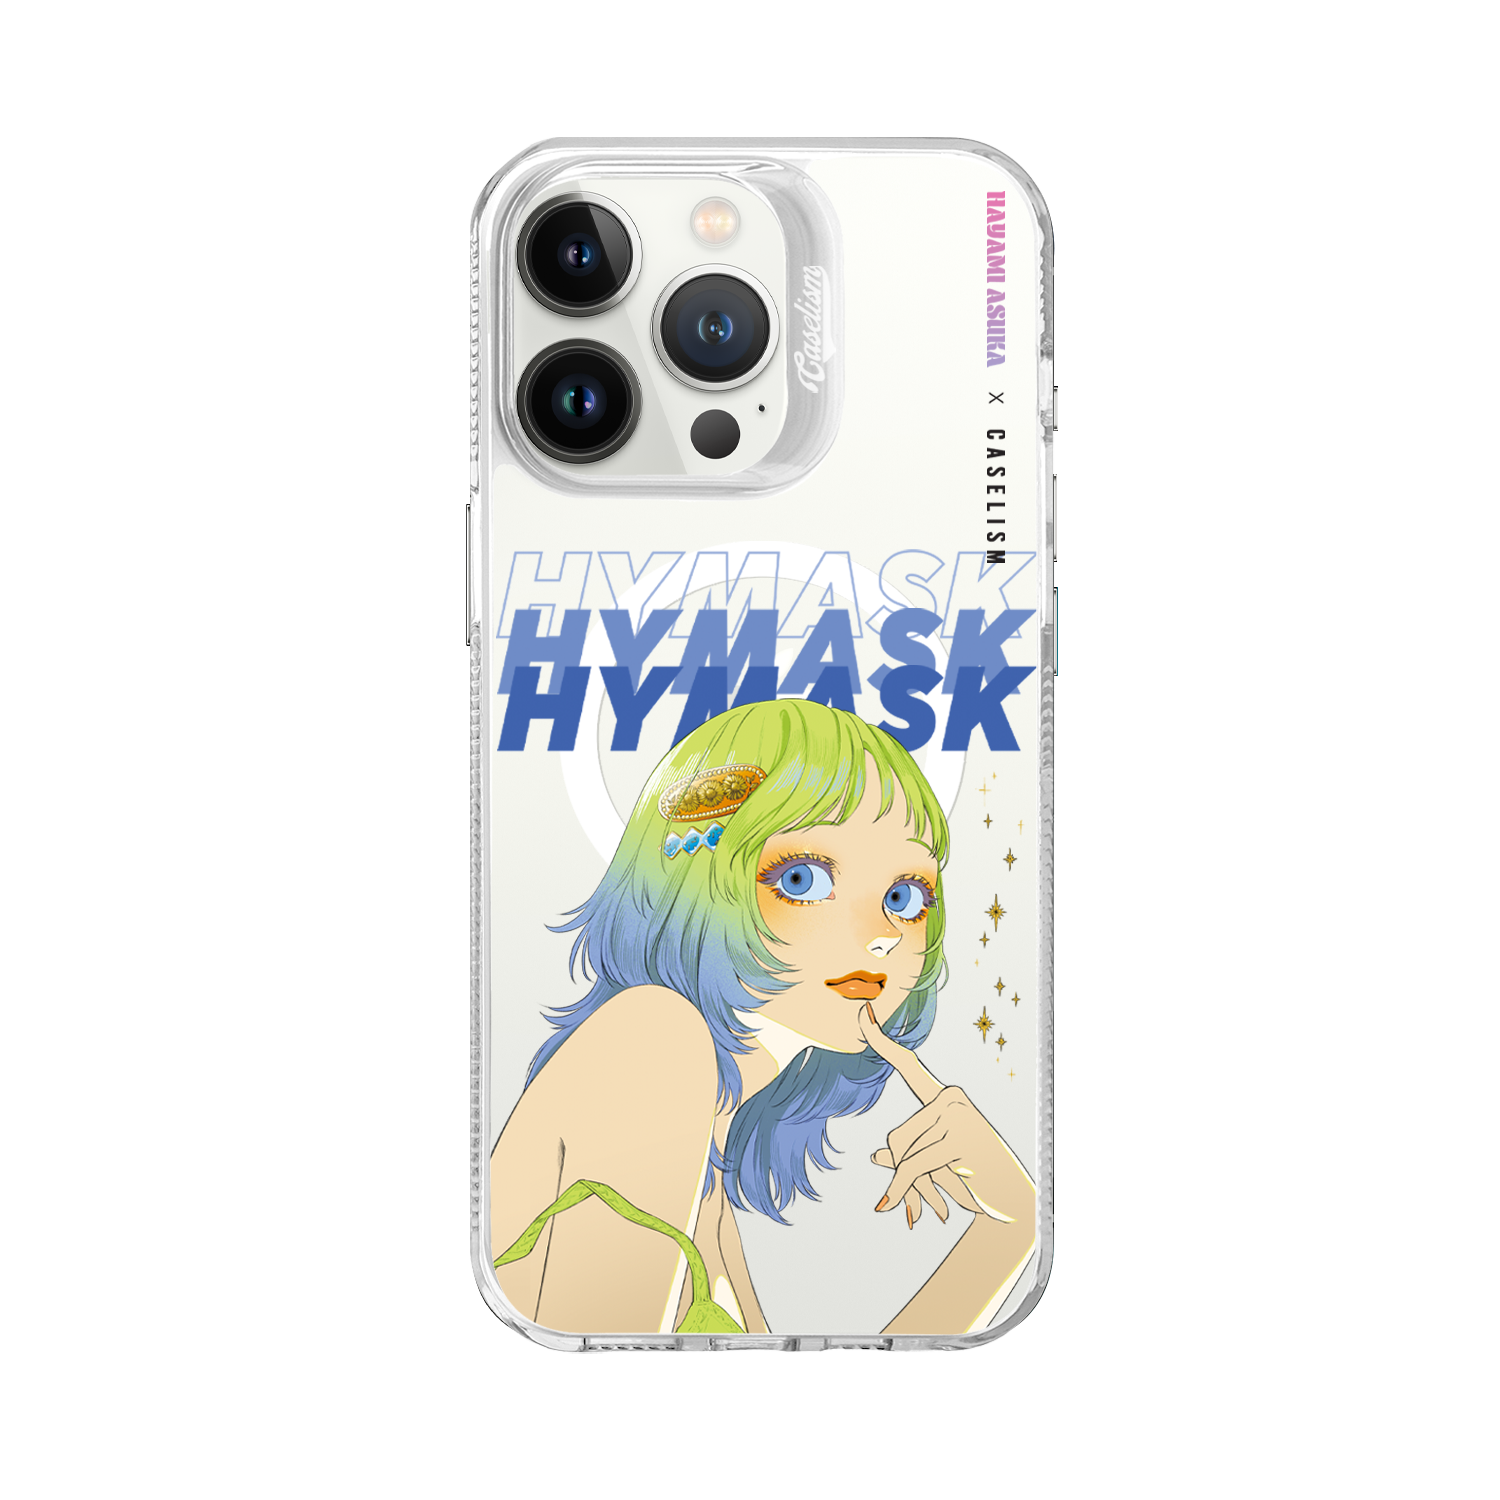 HAYA003 - ColorLite Case for iPhone